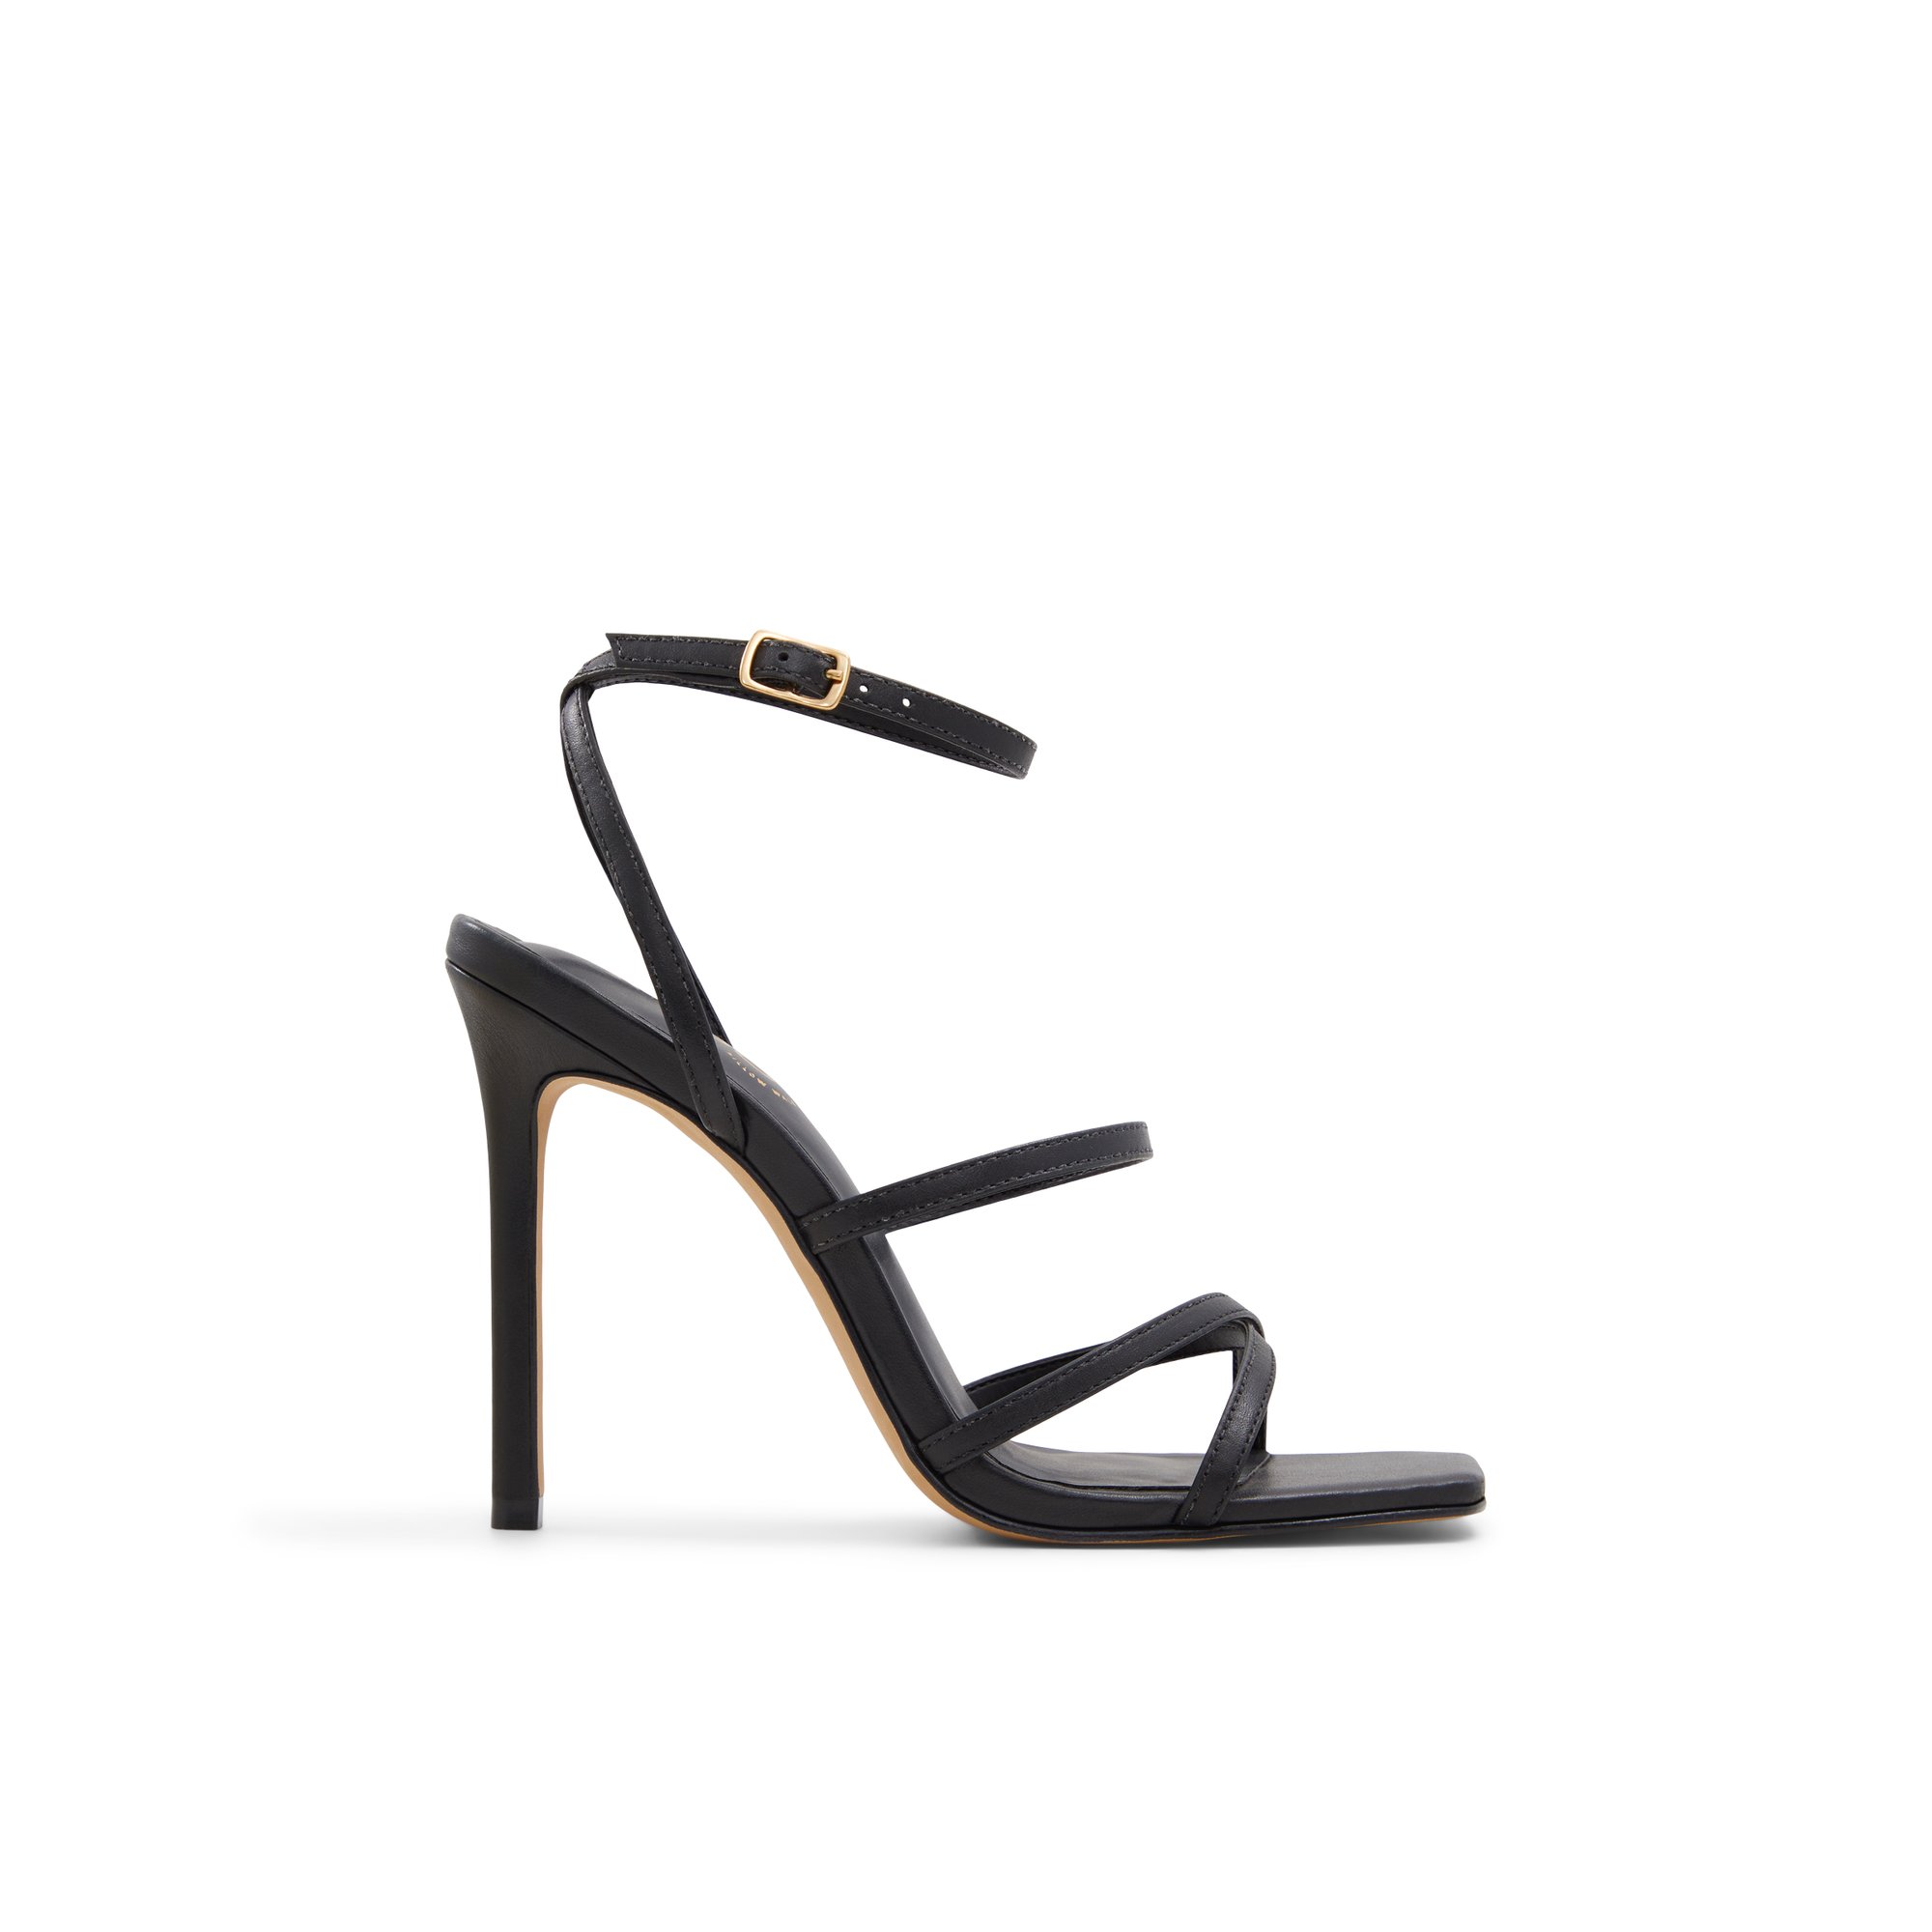 ALDO Galoi - Women's Strappy Sandal Sandals - Black